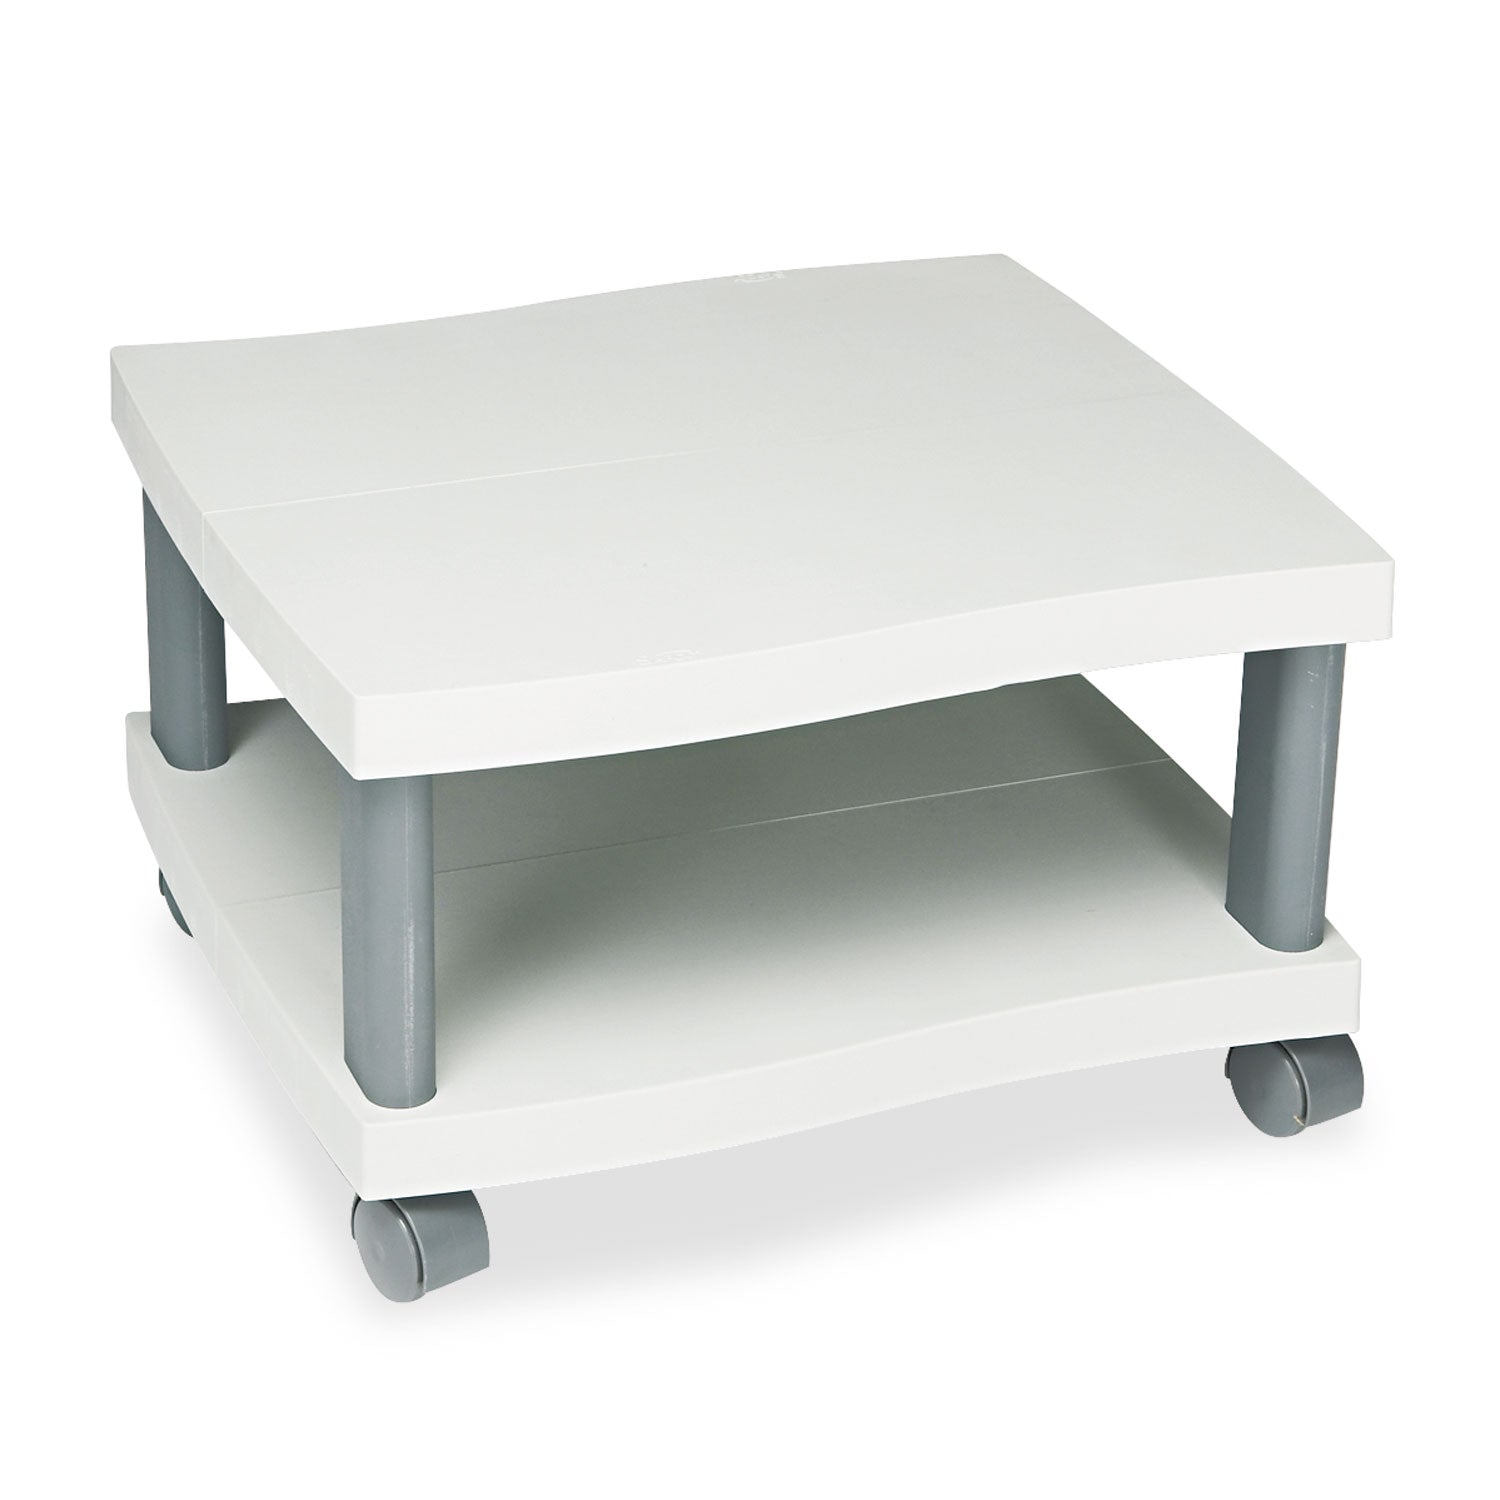 Wave Design Under-Desk Printer Stand, Plastic, 2 Shelves, 20" x 17.5" x 11.5", White/Charcoal Gray - 